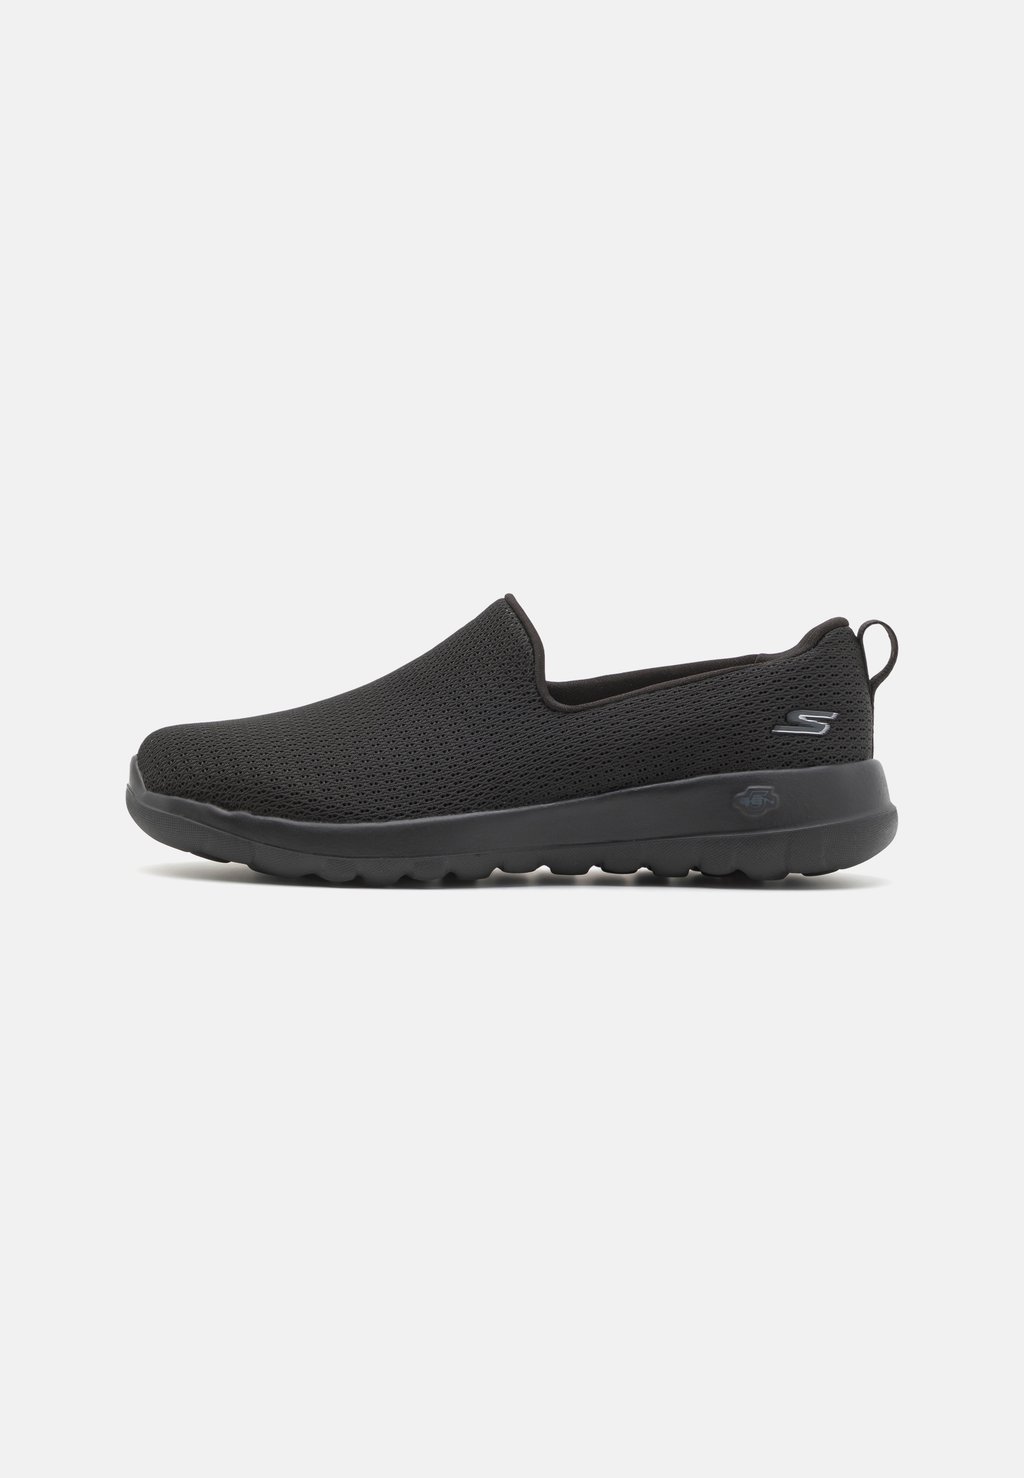 Обувь для ходьбы GO WALK SLIP ON Skechers Performance, цвет black обувь для ходьбы go walk 7 slip in skechers performance черный